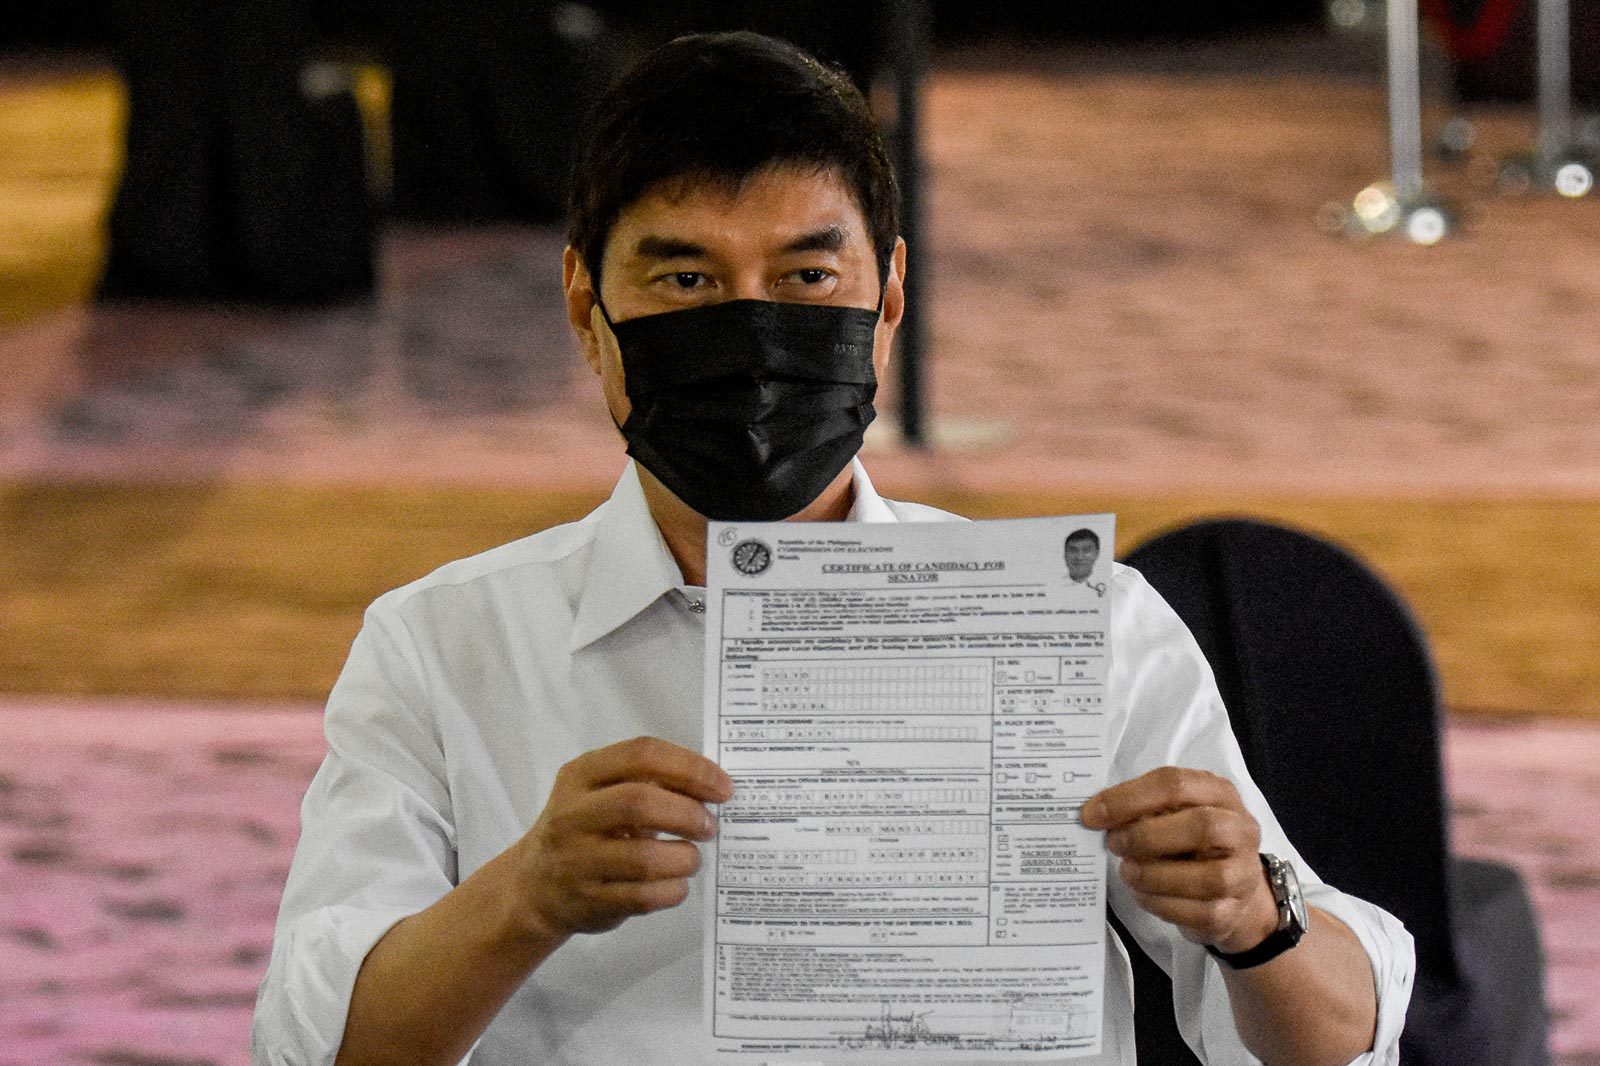 IBP-Ilocos Norte slams Raffy Tulfo for ‘undermining integrity’ of public lawyers